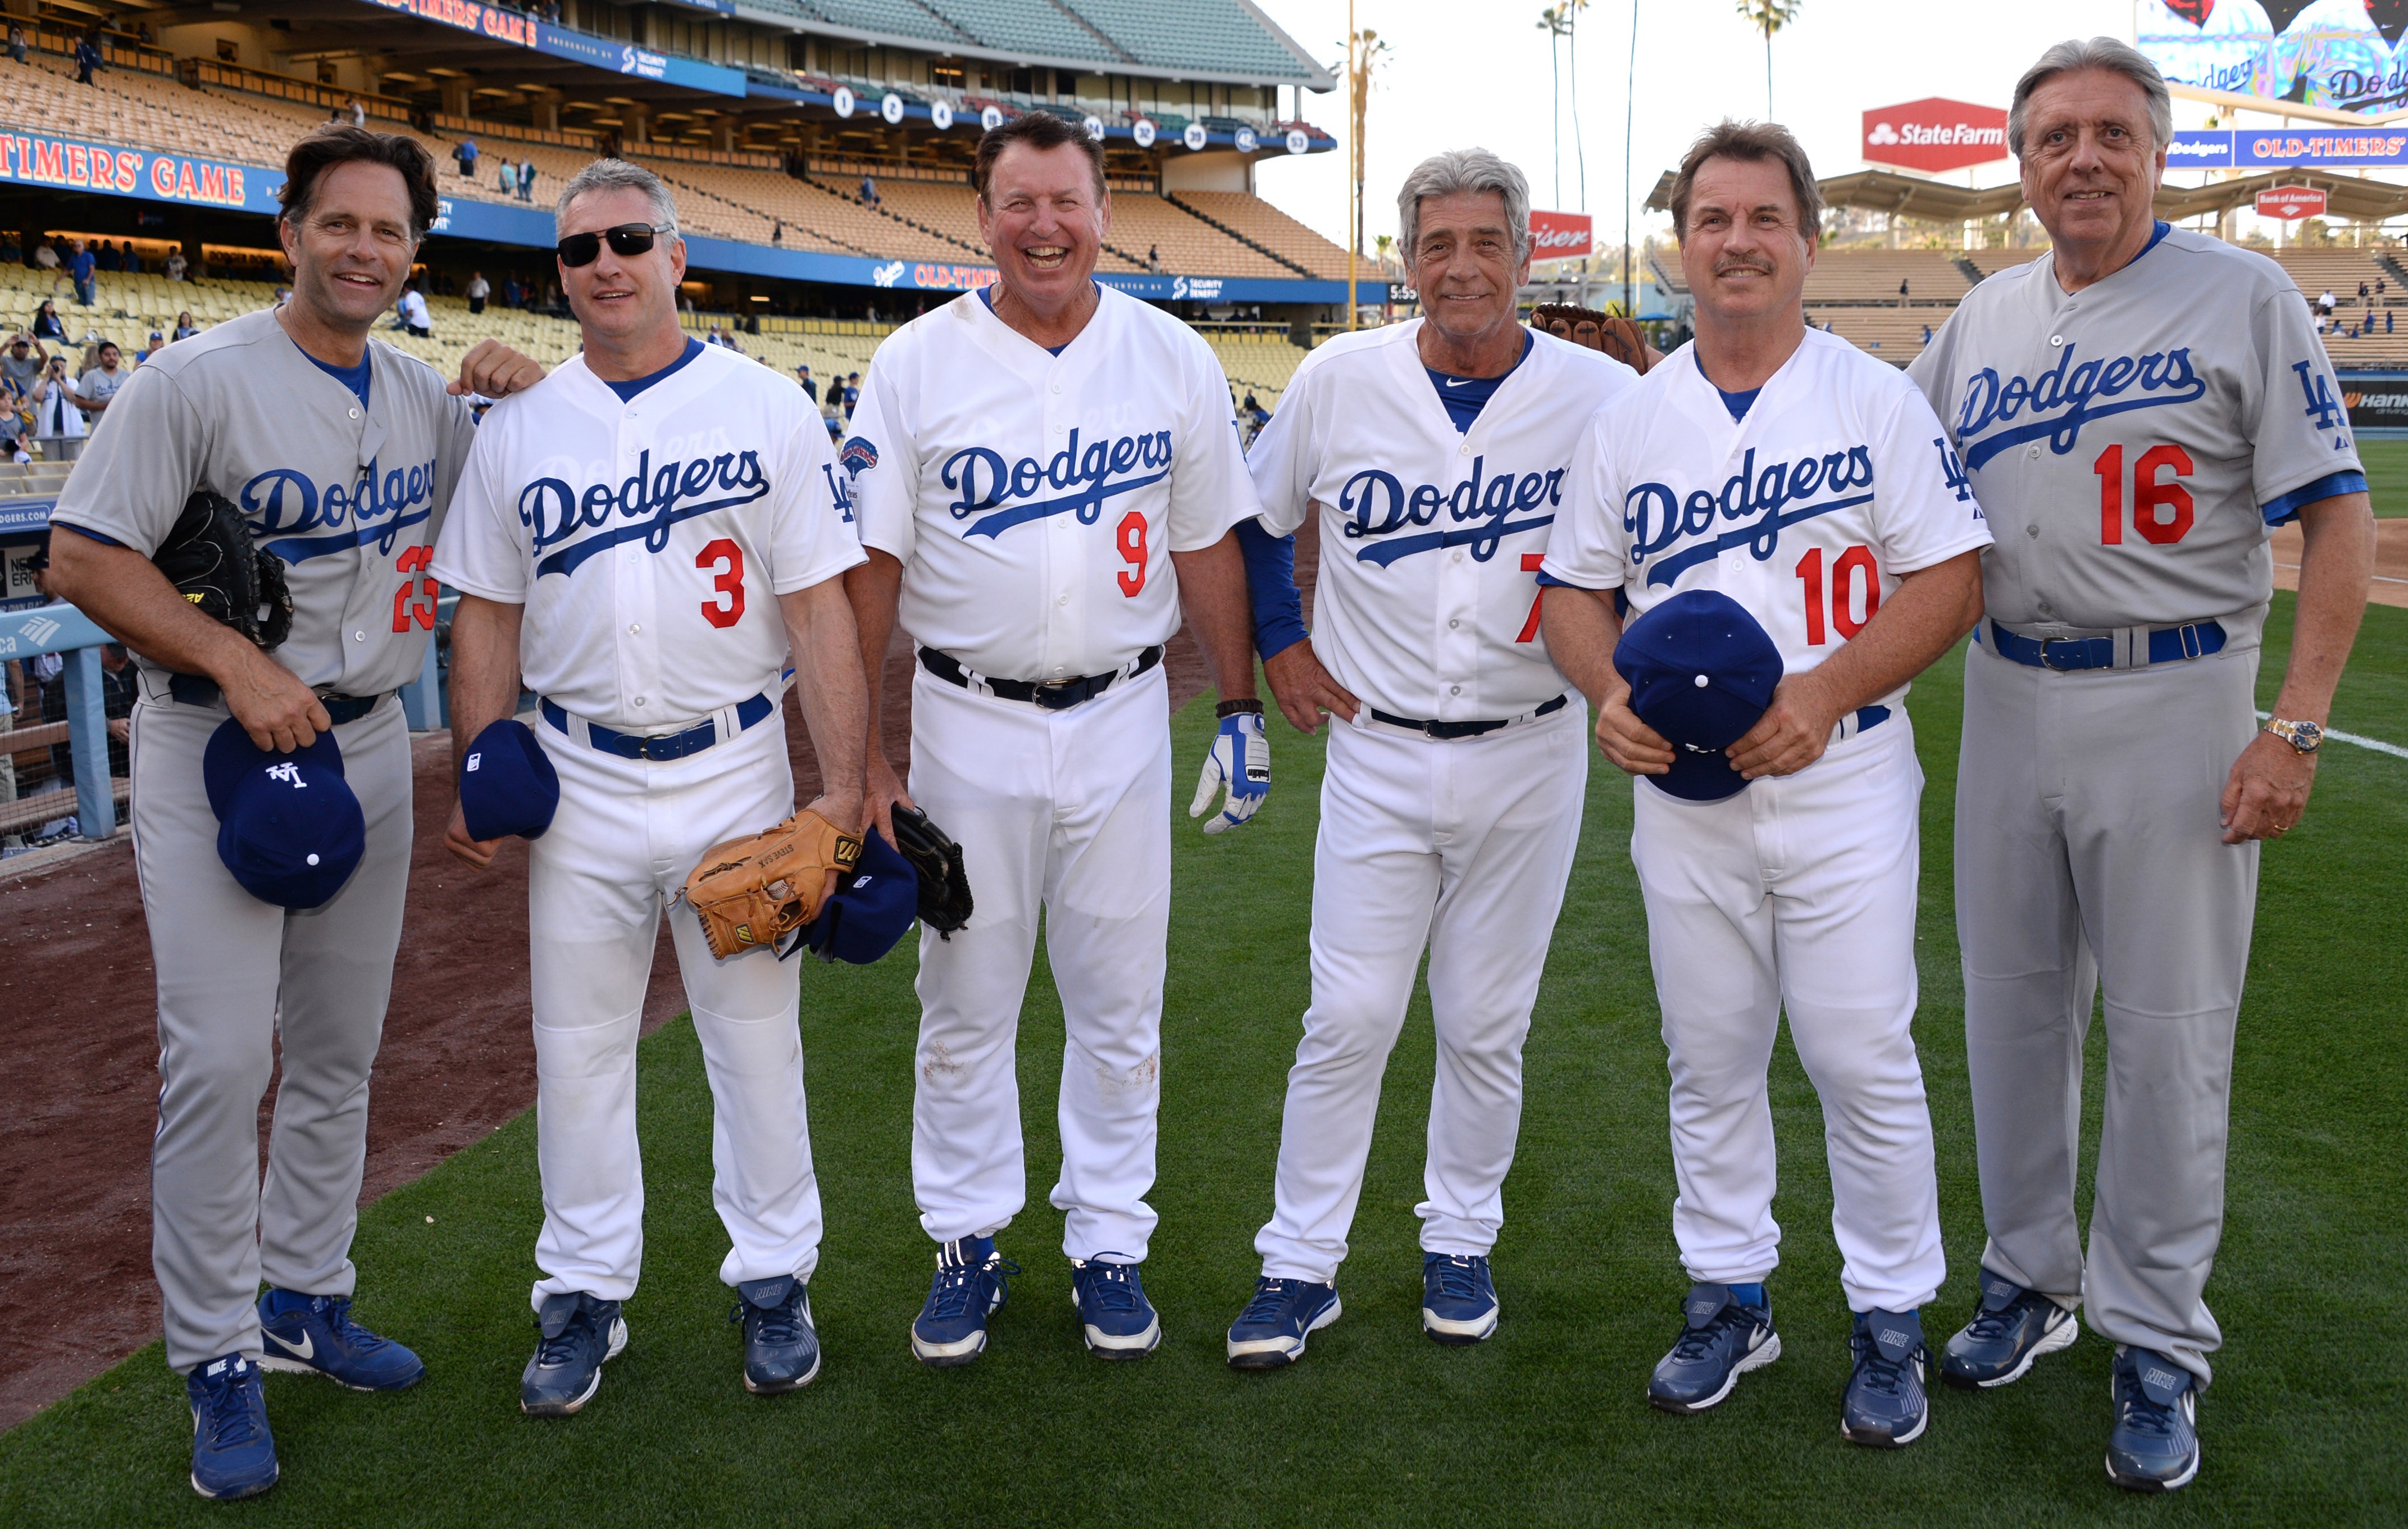 Steve Sax, Dodgers  Dodgers baseball, La dodgers baseball, Dodgers